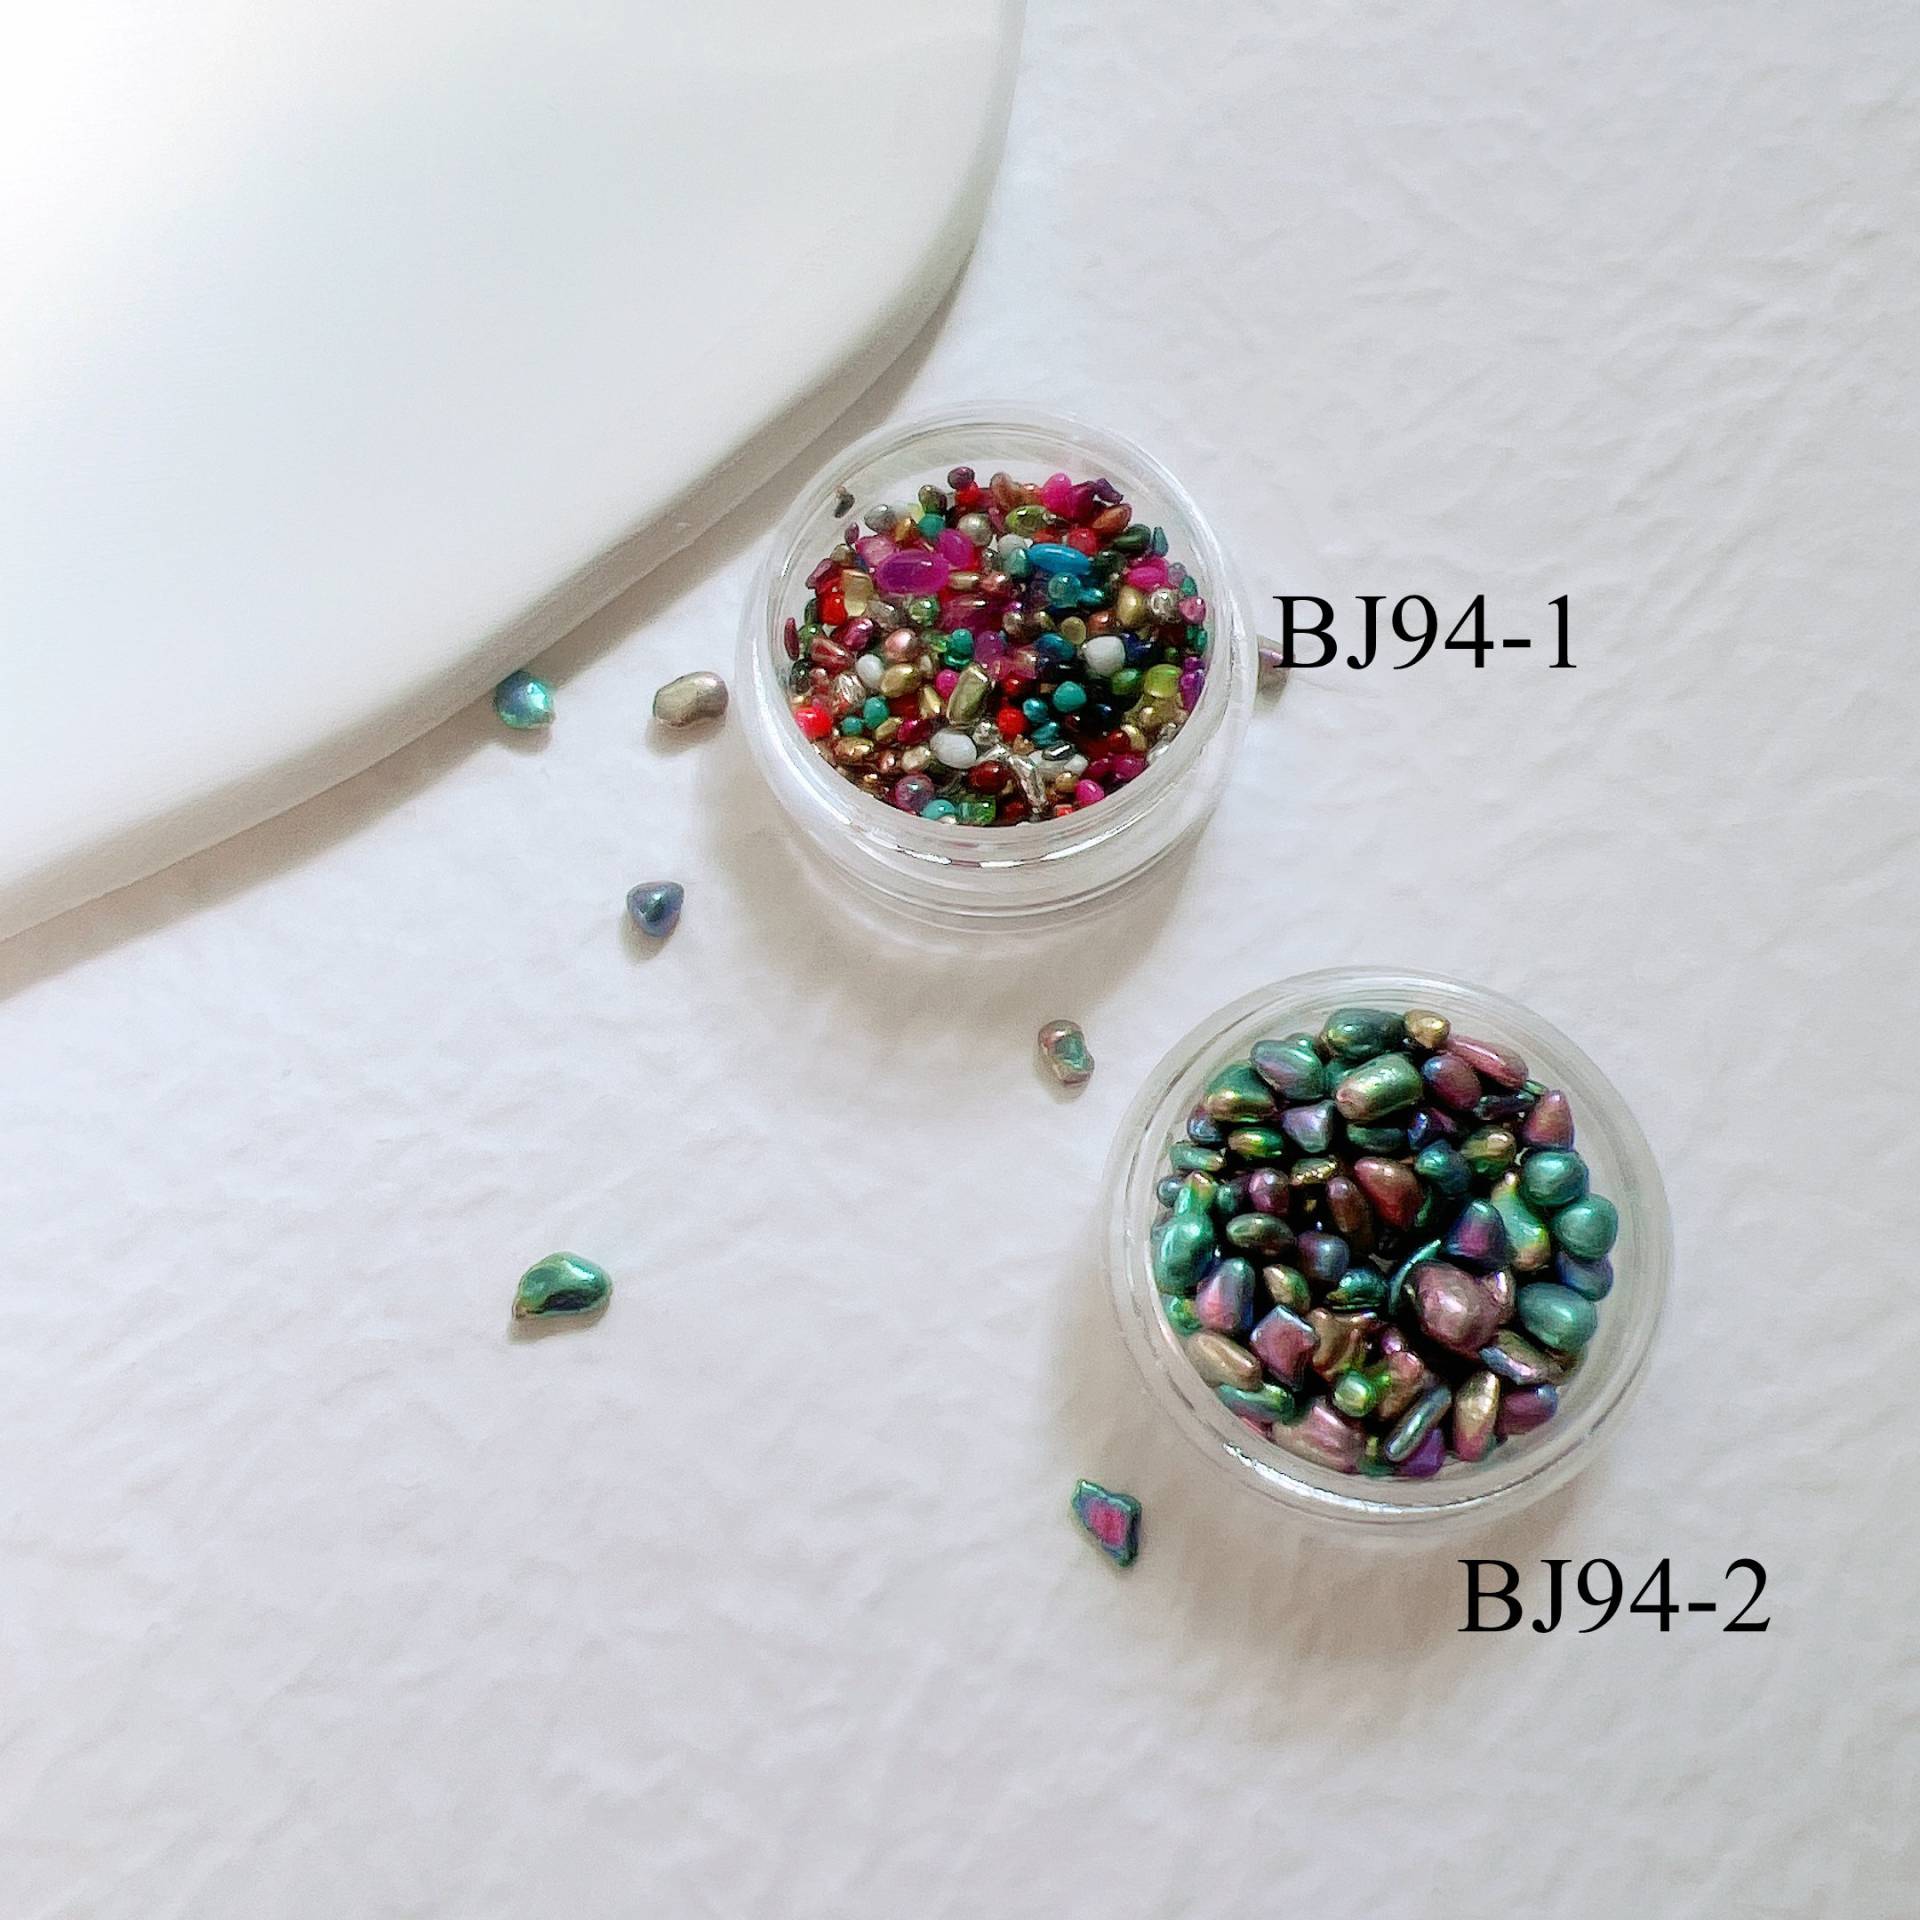 Nail Art Mixed Color Beads Dekorationen Resin Perlen Bj94 von nailartfairy